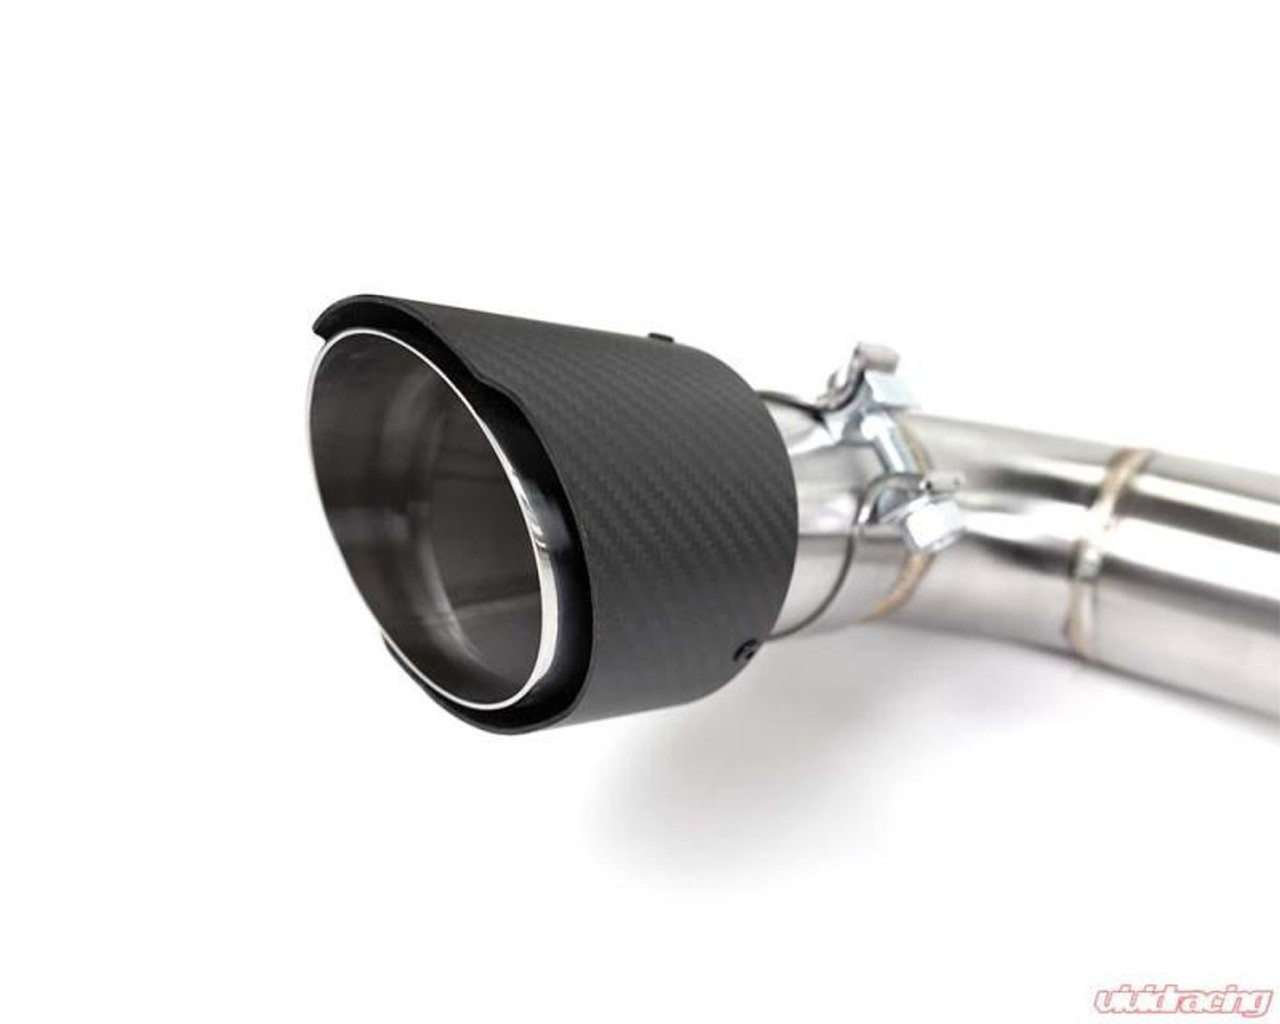 Vivid Racing VR Performance McLaren 570 Valvetronic Exhaust System With Carbon Fiber Tips - VR-570S-170S 